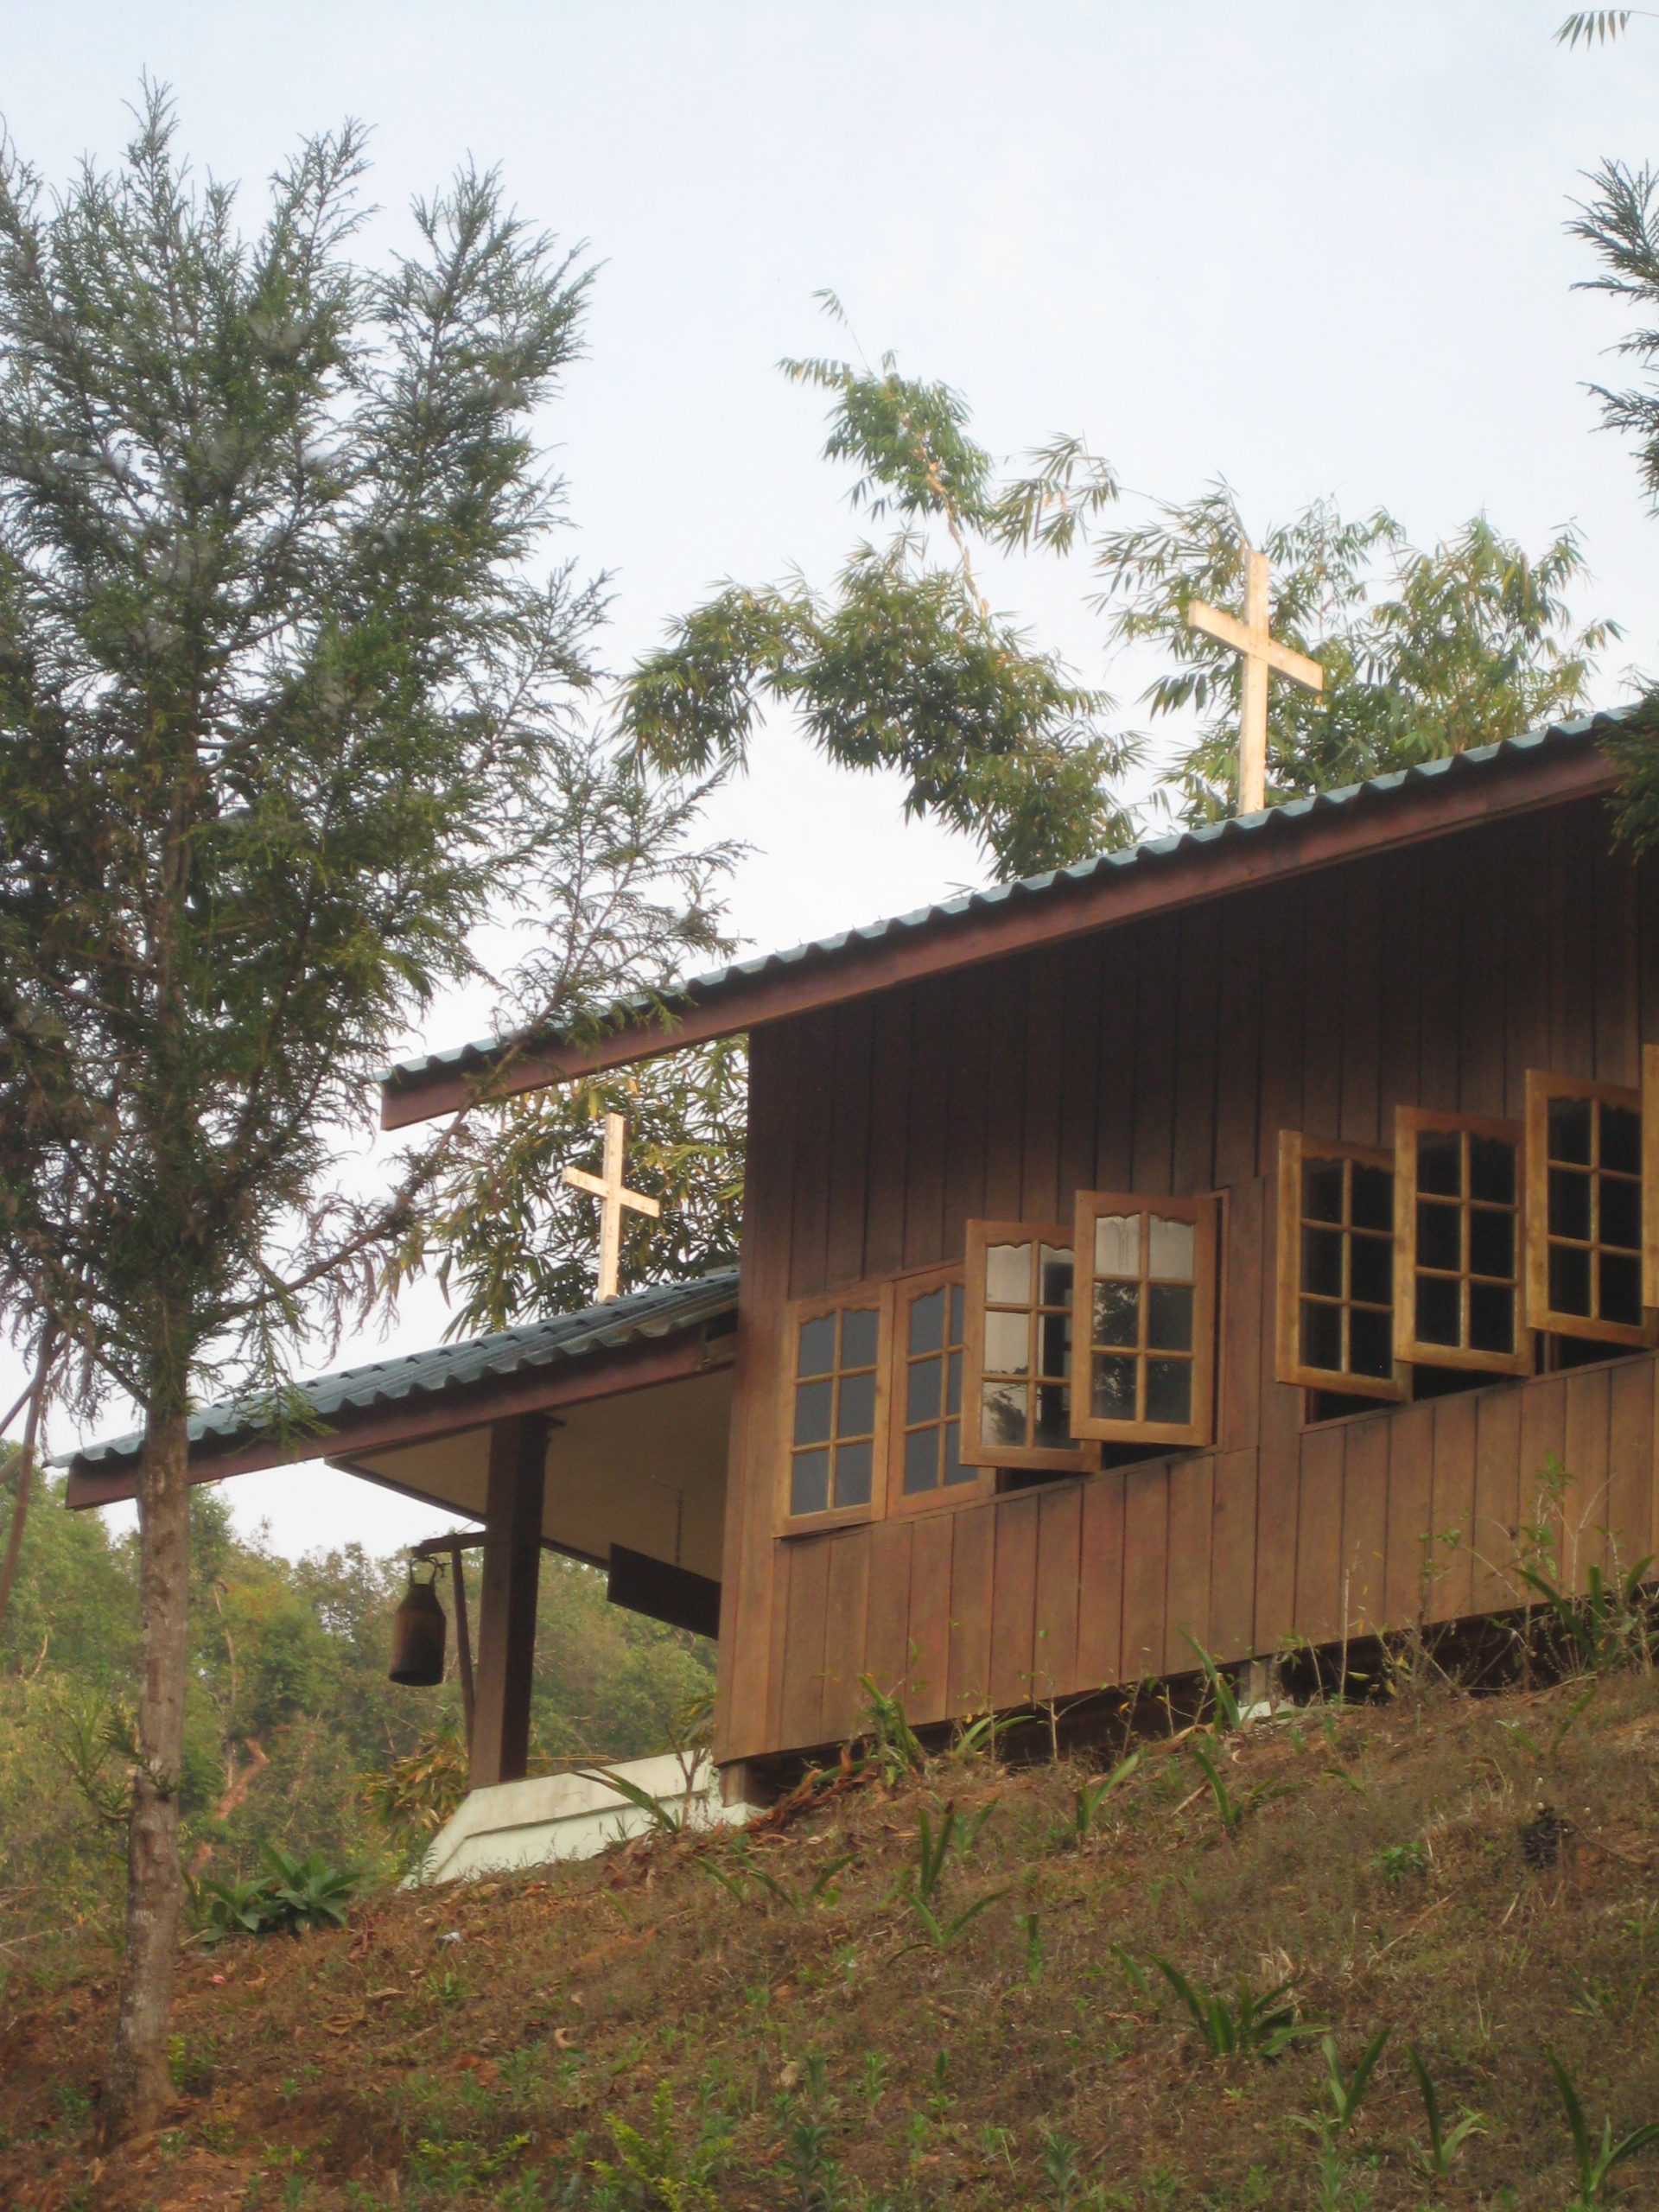 L'église de Maesapao aujourd'hui